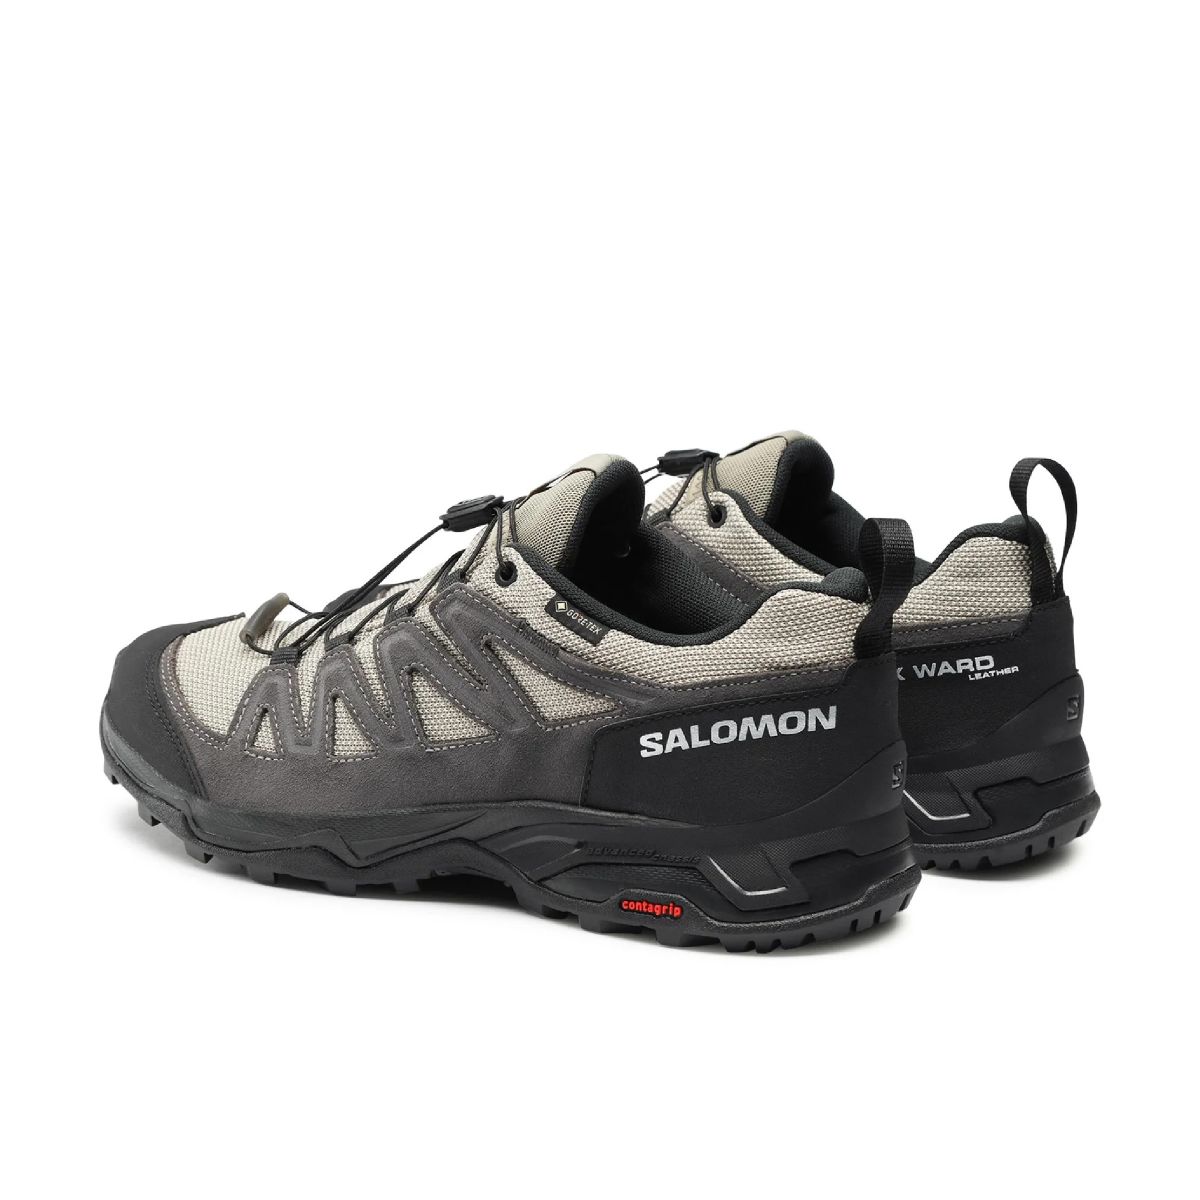 Треккинговые кроссови Salomon X Ward Leather Gore-Tex. Серый 2